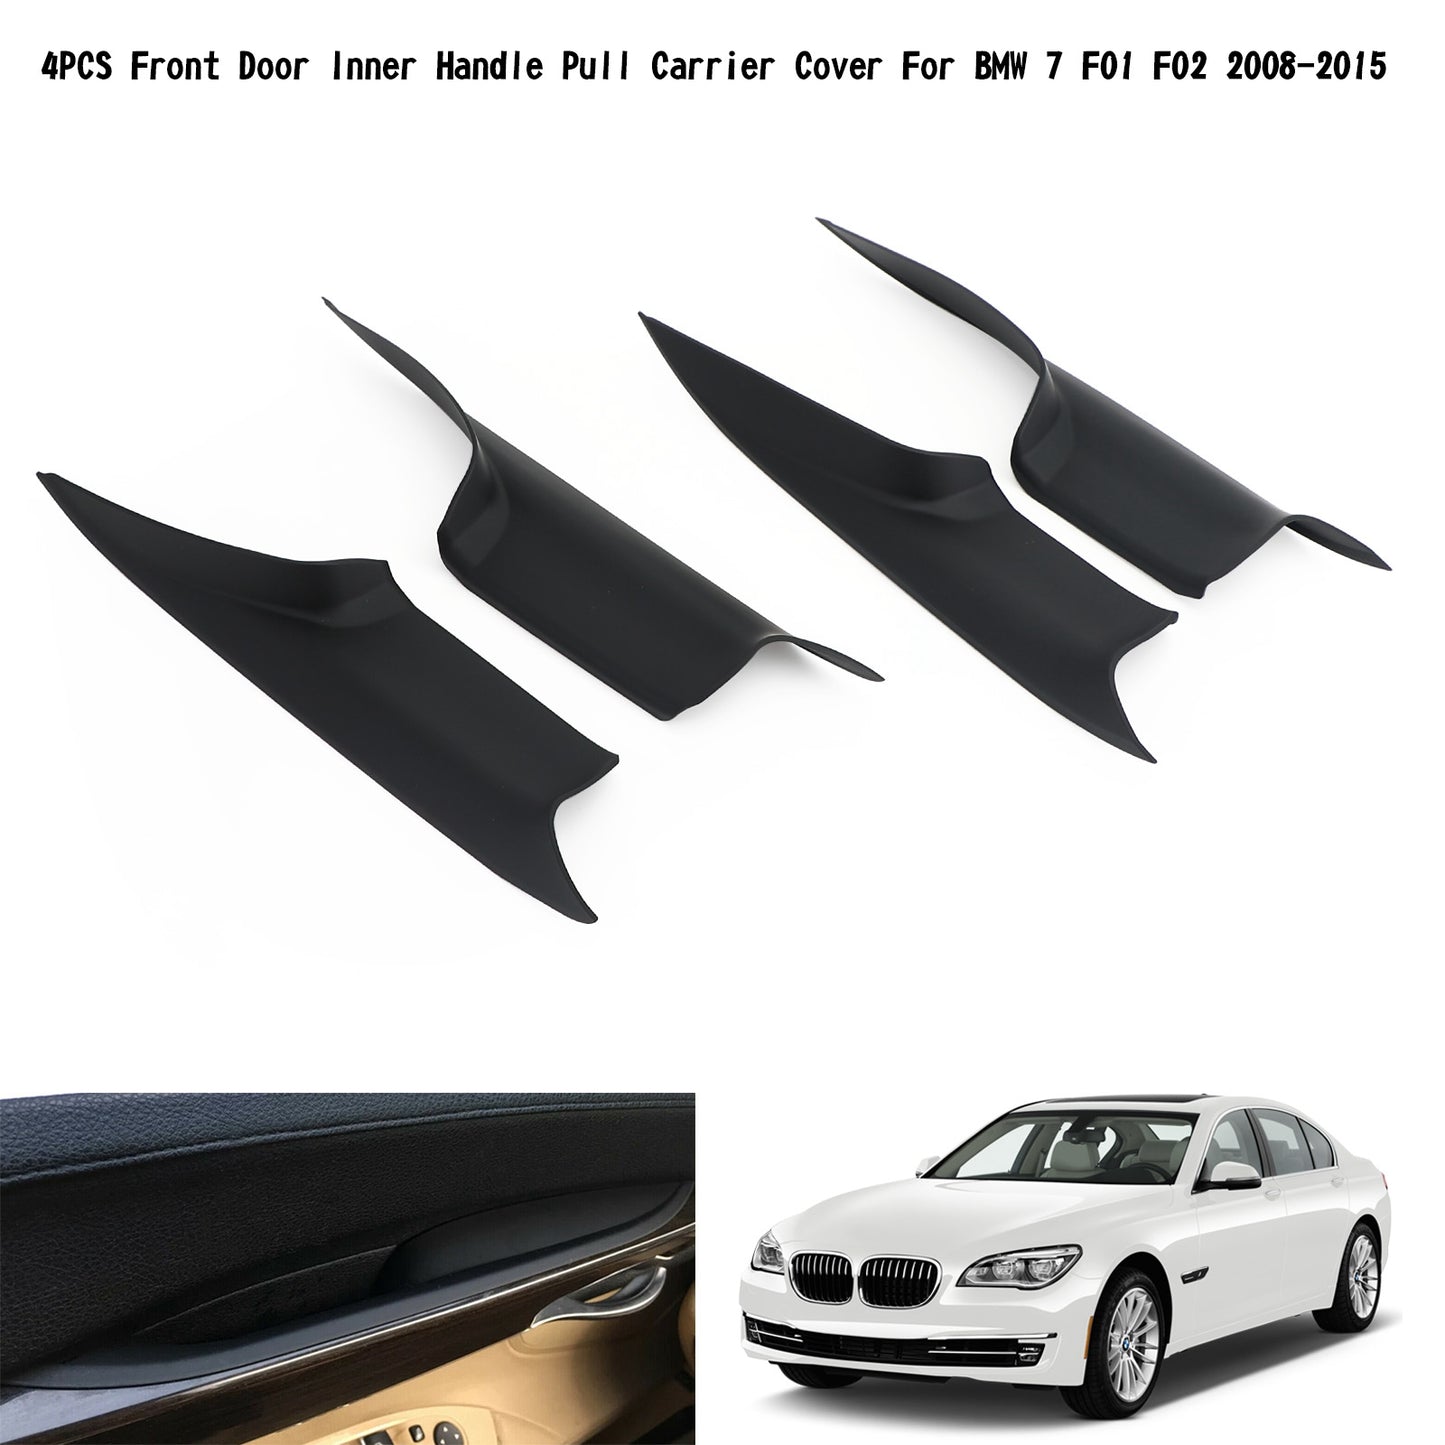 2008-2015 BMW 7 F01 F02 4PCS Front Door InC168-A035-BLKner Handle Pull Carrier Cover